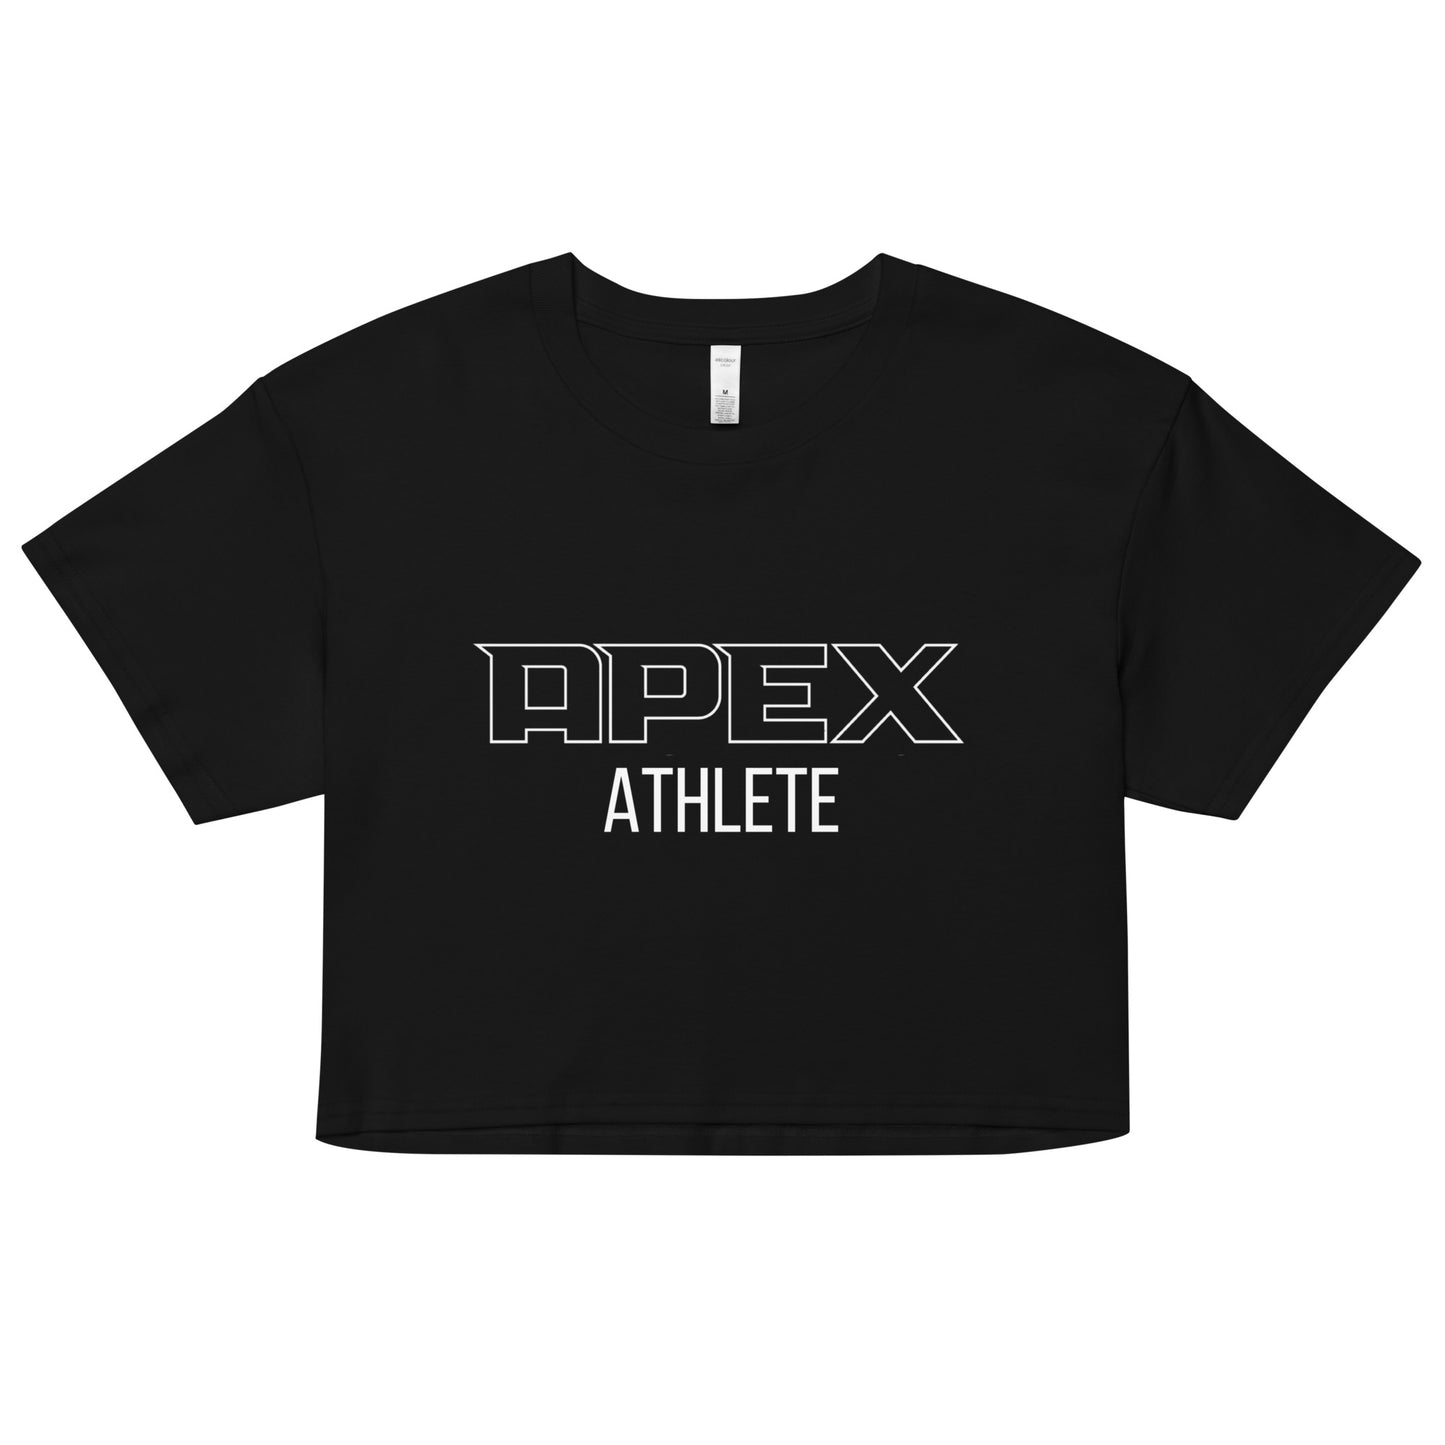 APEX Athlete crop top